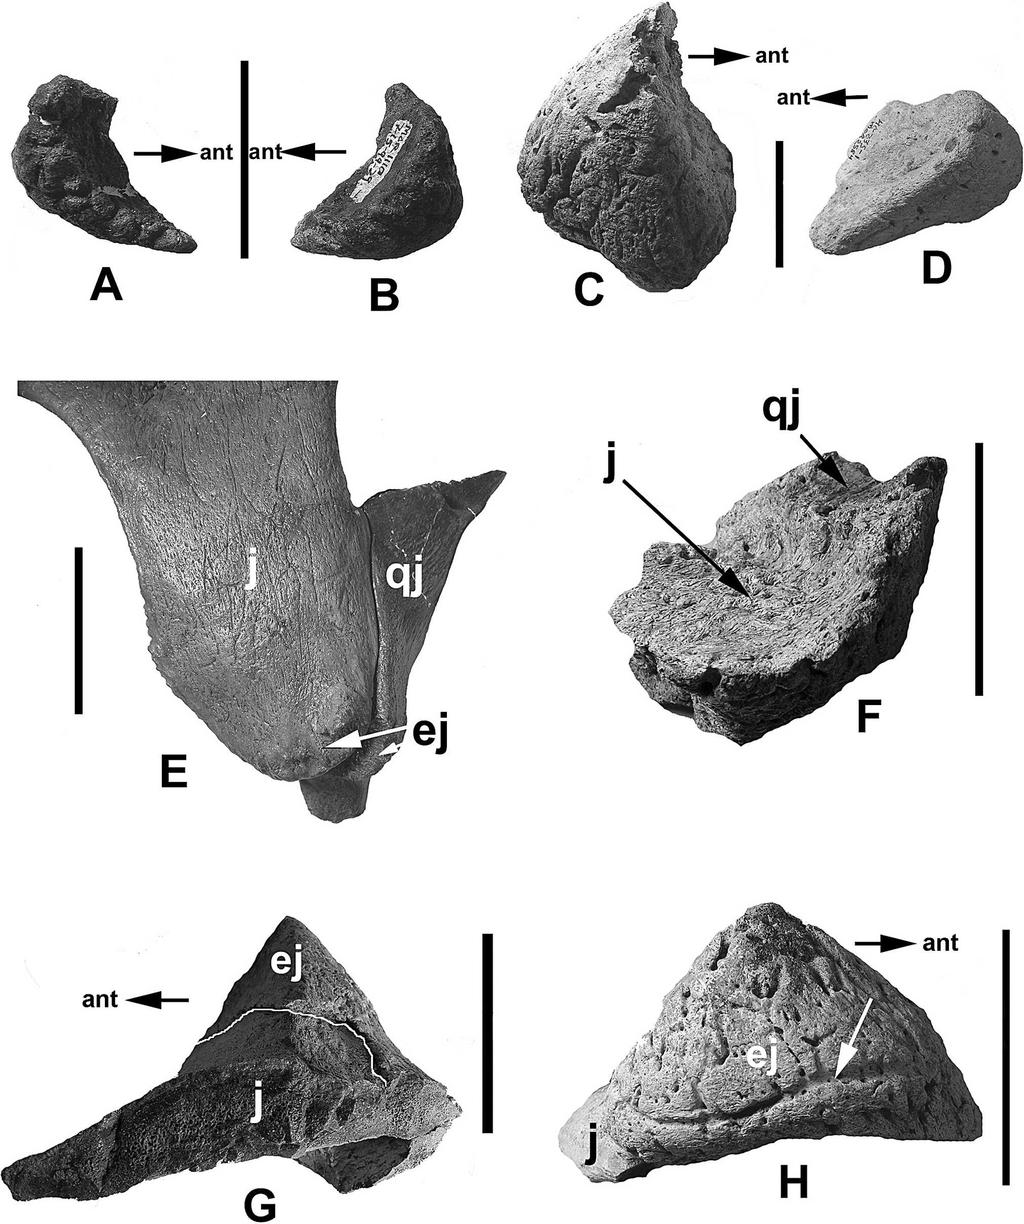 140 JOURNAL OF VERTEBRATE PALEONTOLOGY, VOL. 28, NO. 1, 2008 FIGURE 5. Triceratops epijugals.